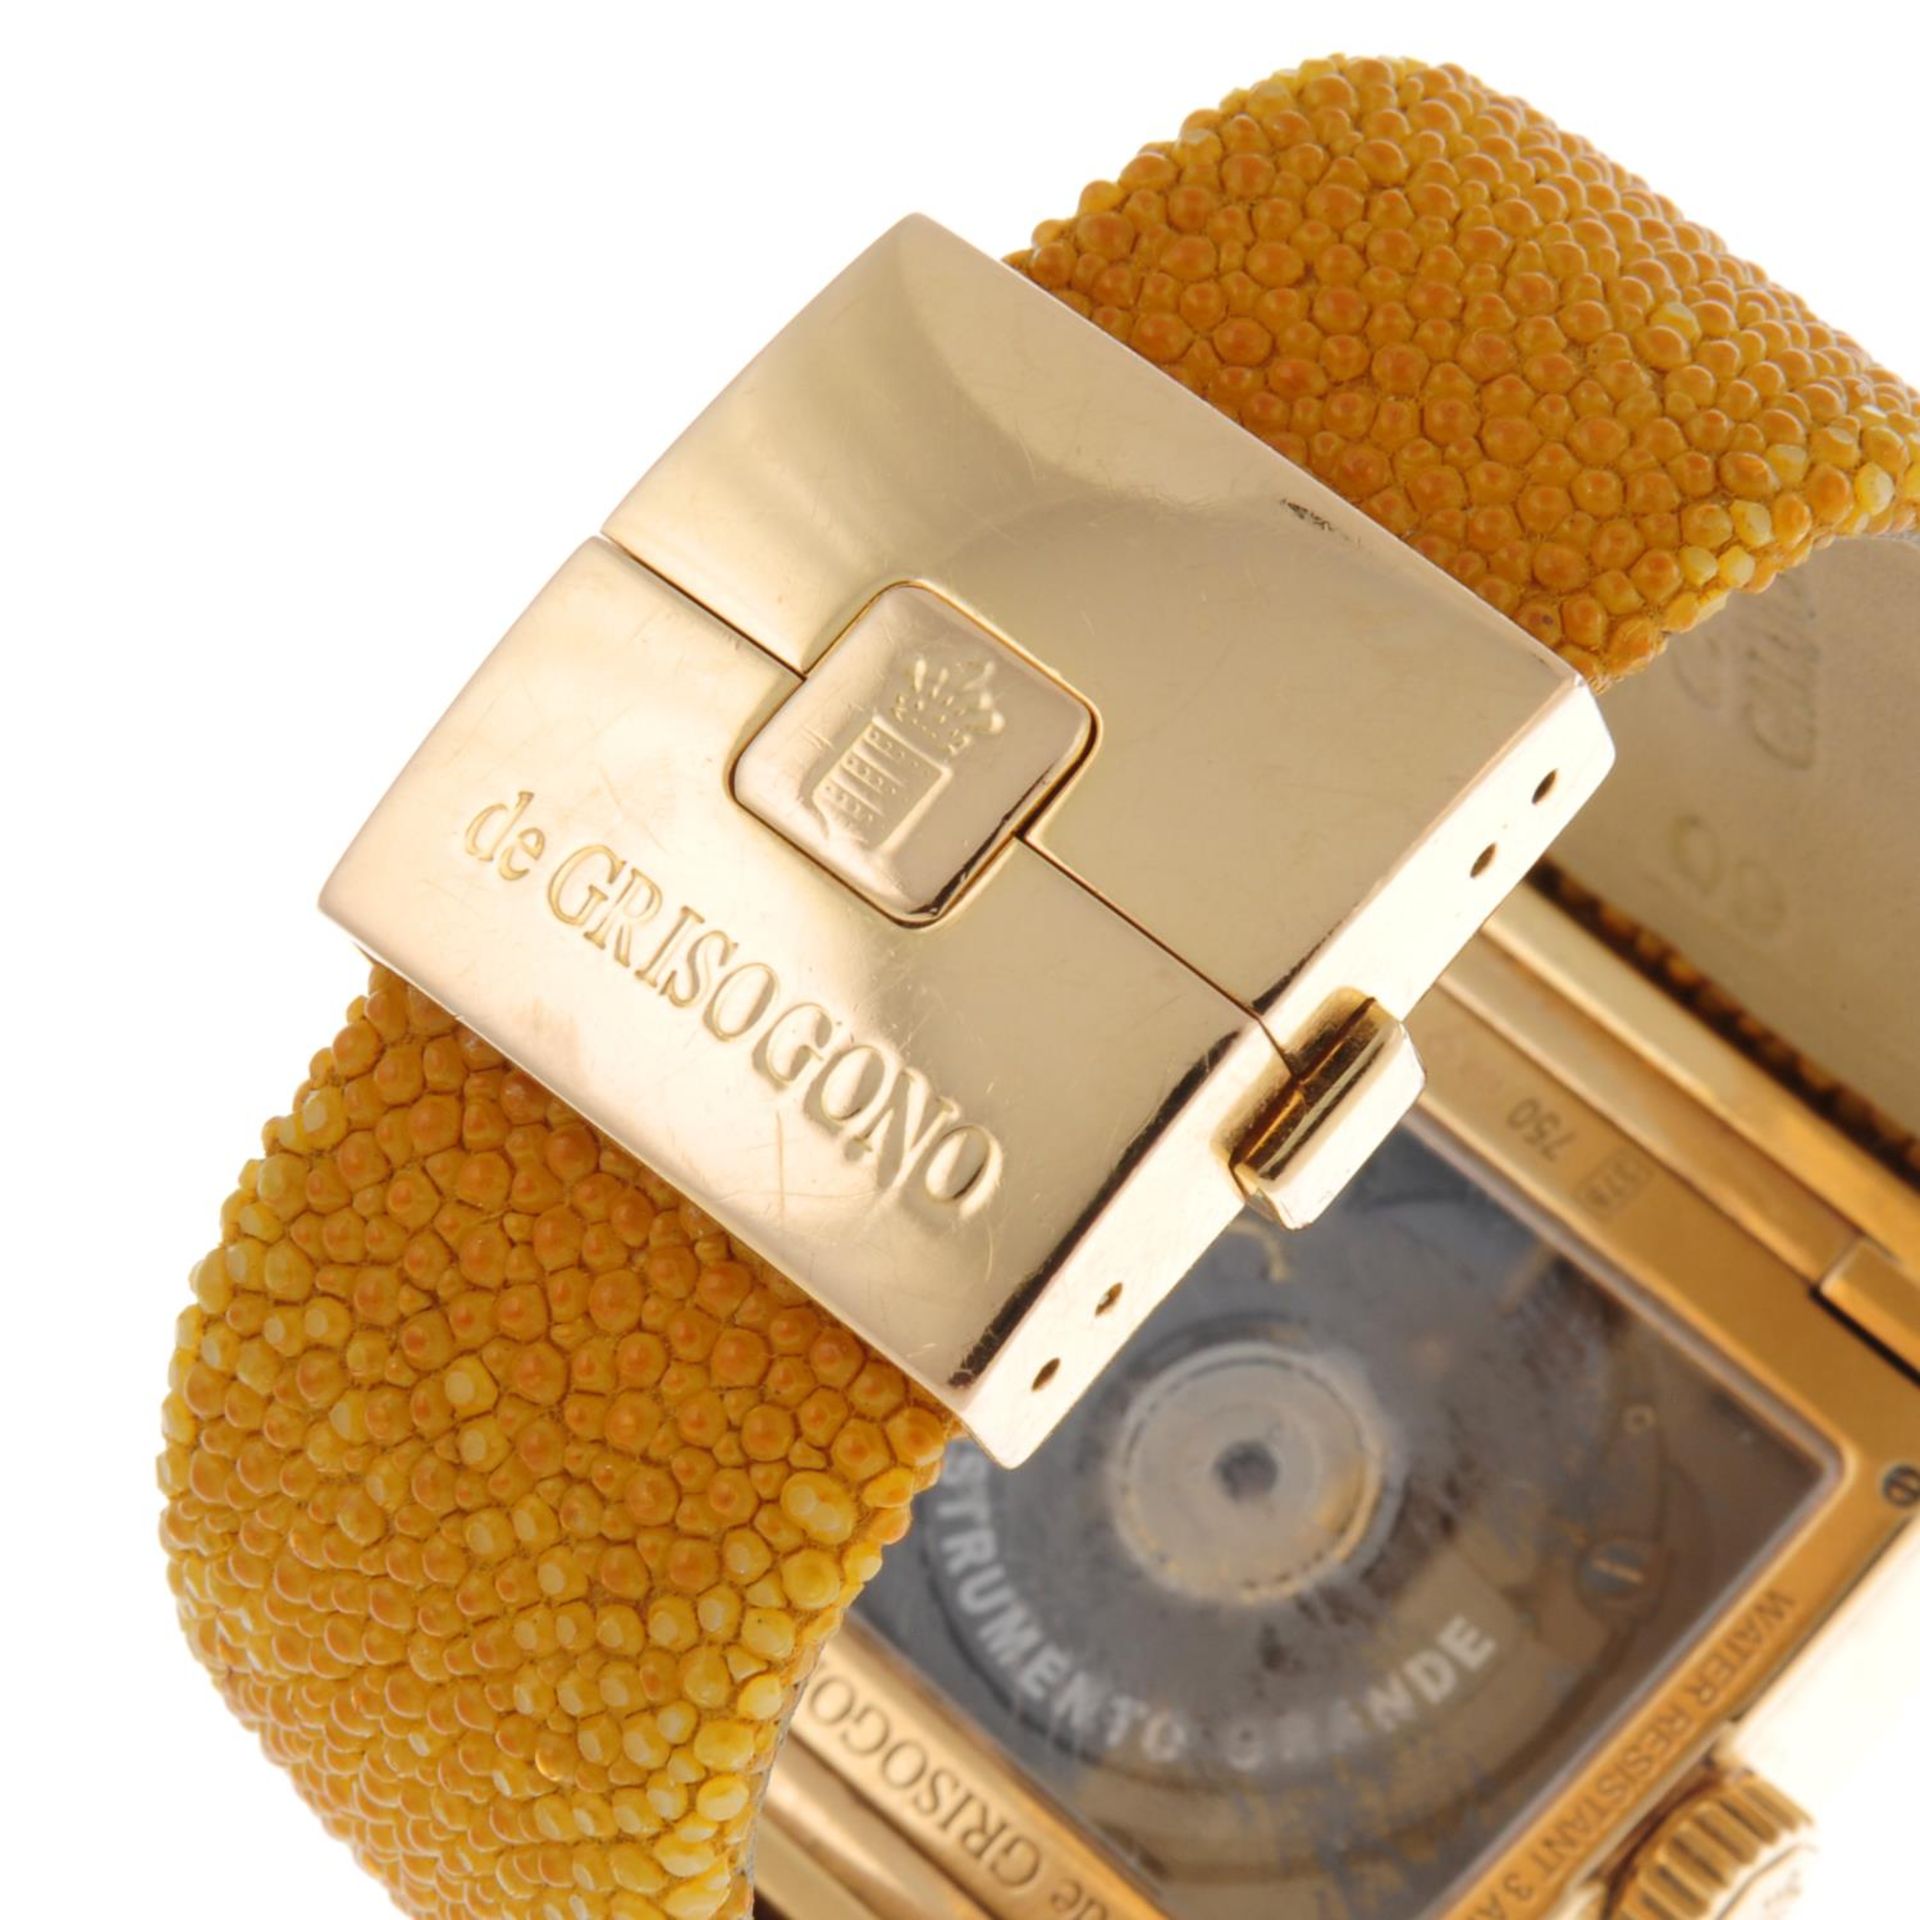 DE GRISOGONO - a gentleman's Instrumento Grande wrist watch. - Image 2 of 5